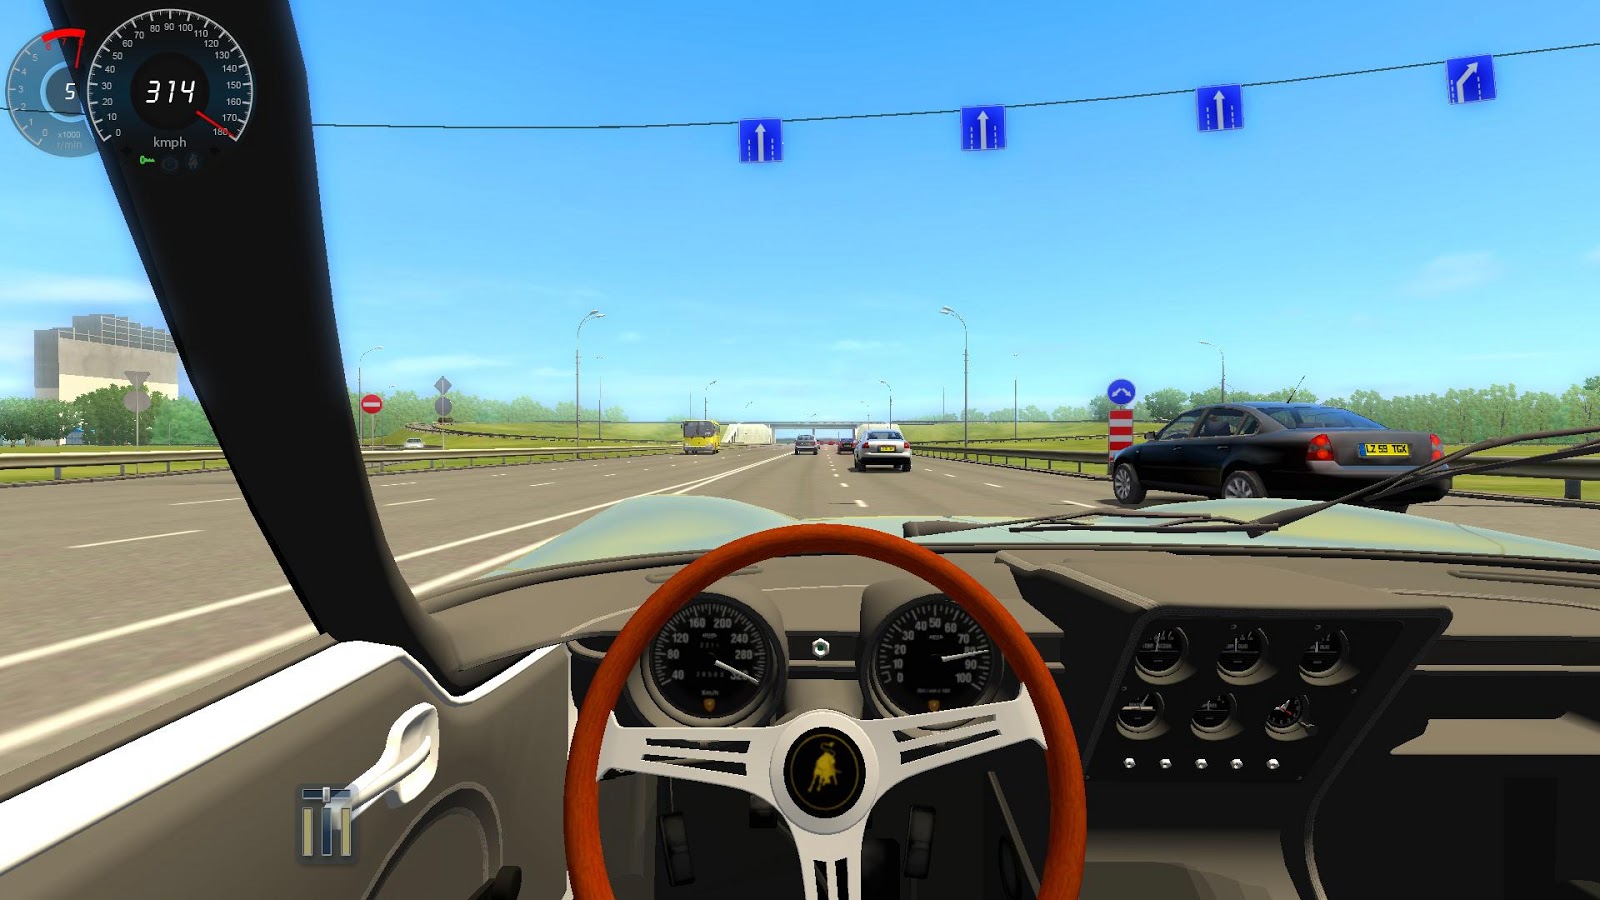 Msvcp110 city car driving. City car Driving Simulator. Кар драйвинг симулятор 2. Багги City car Driving.